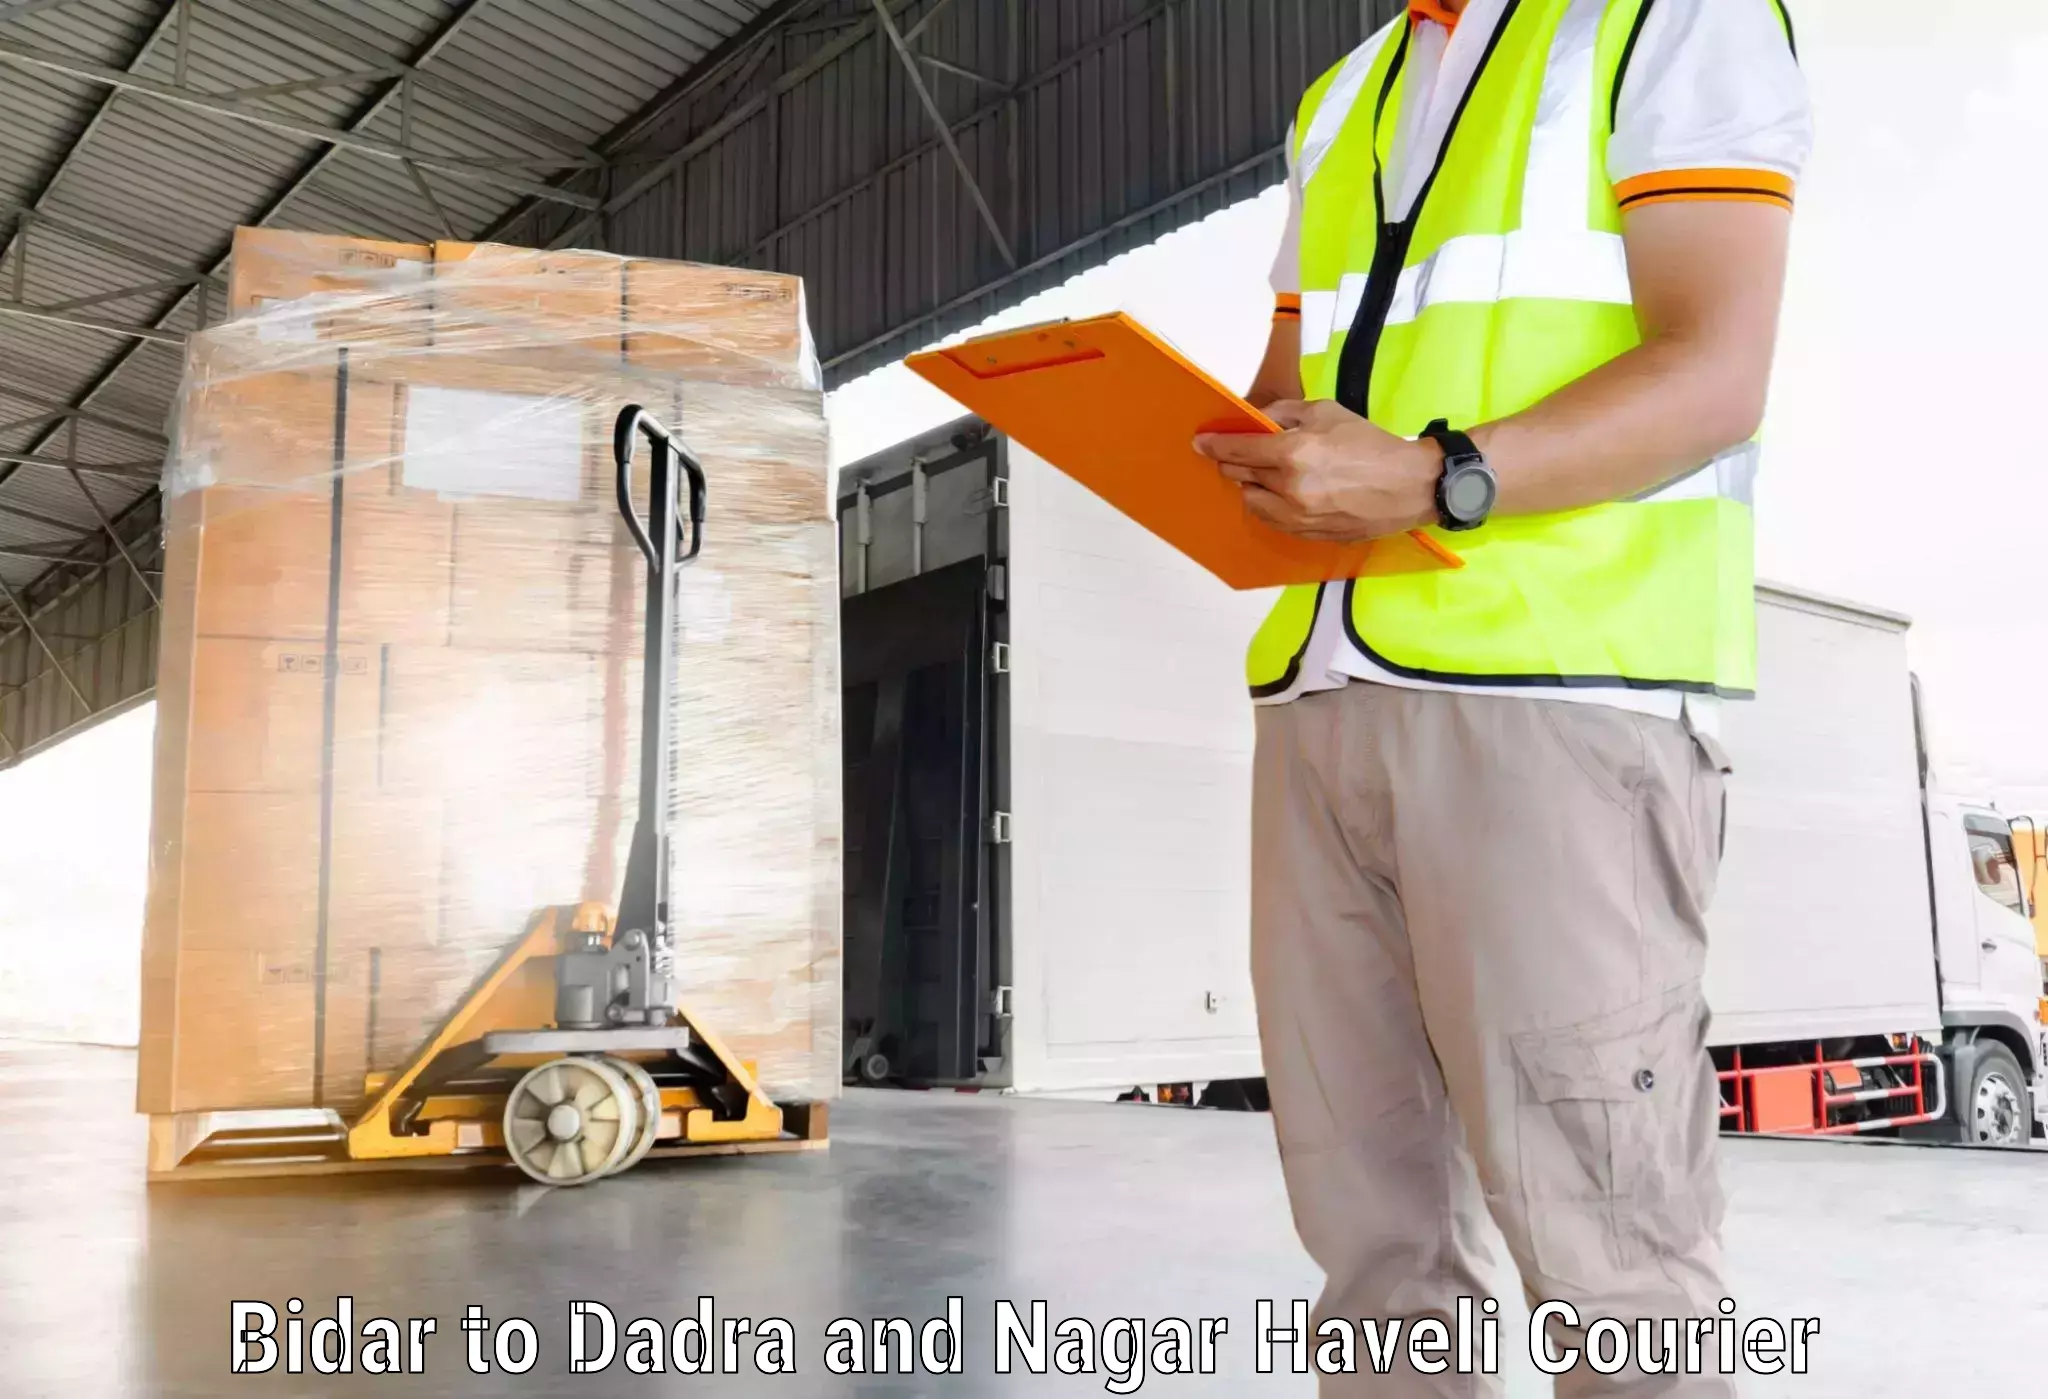 Efficient shipping platforms Bidar to Dadra and Nagar Haveli